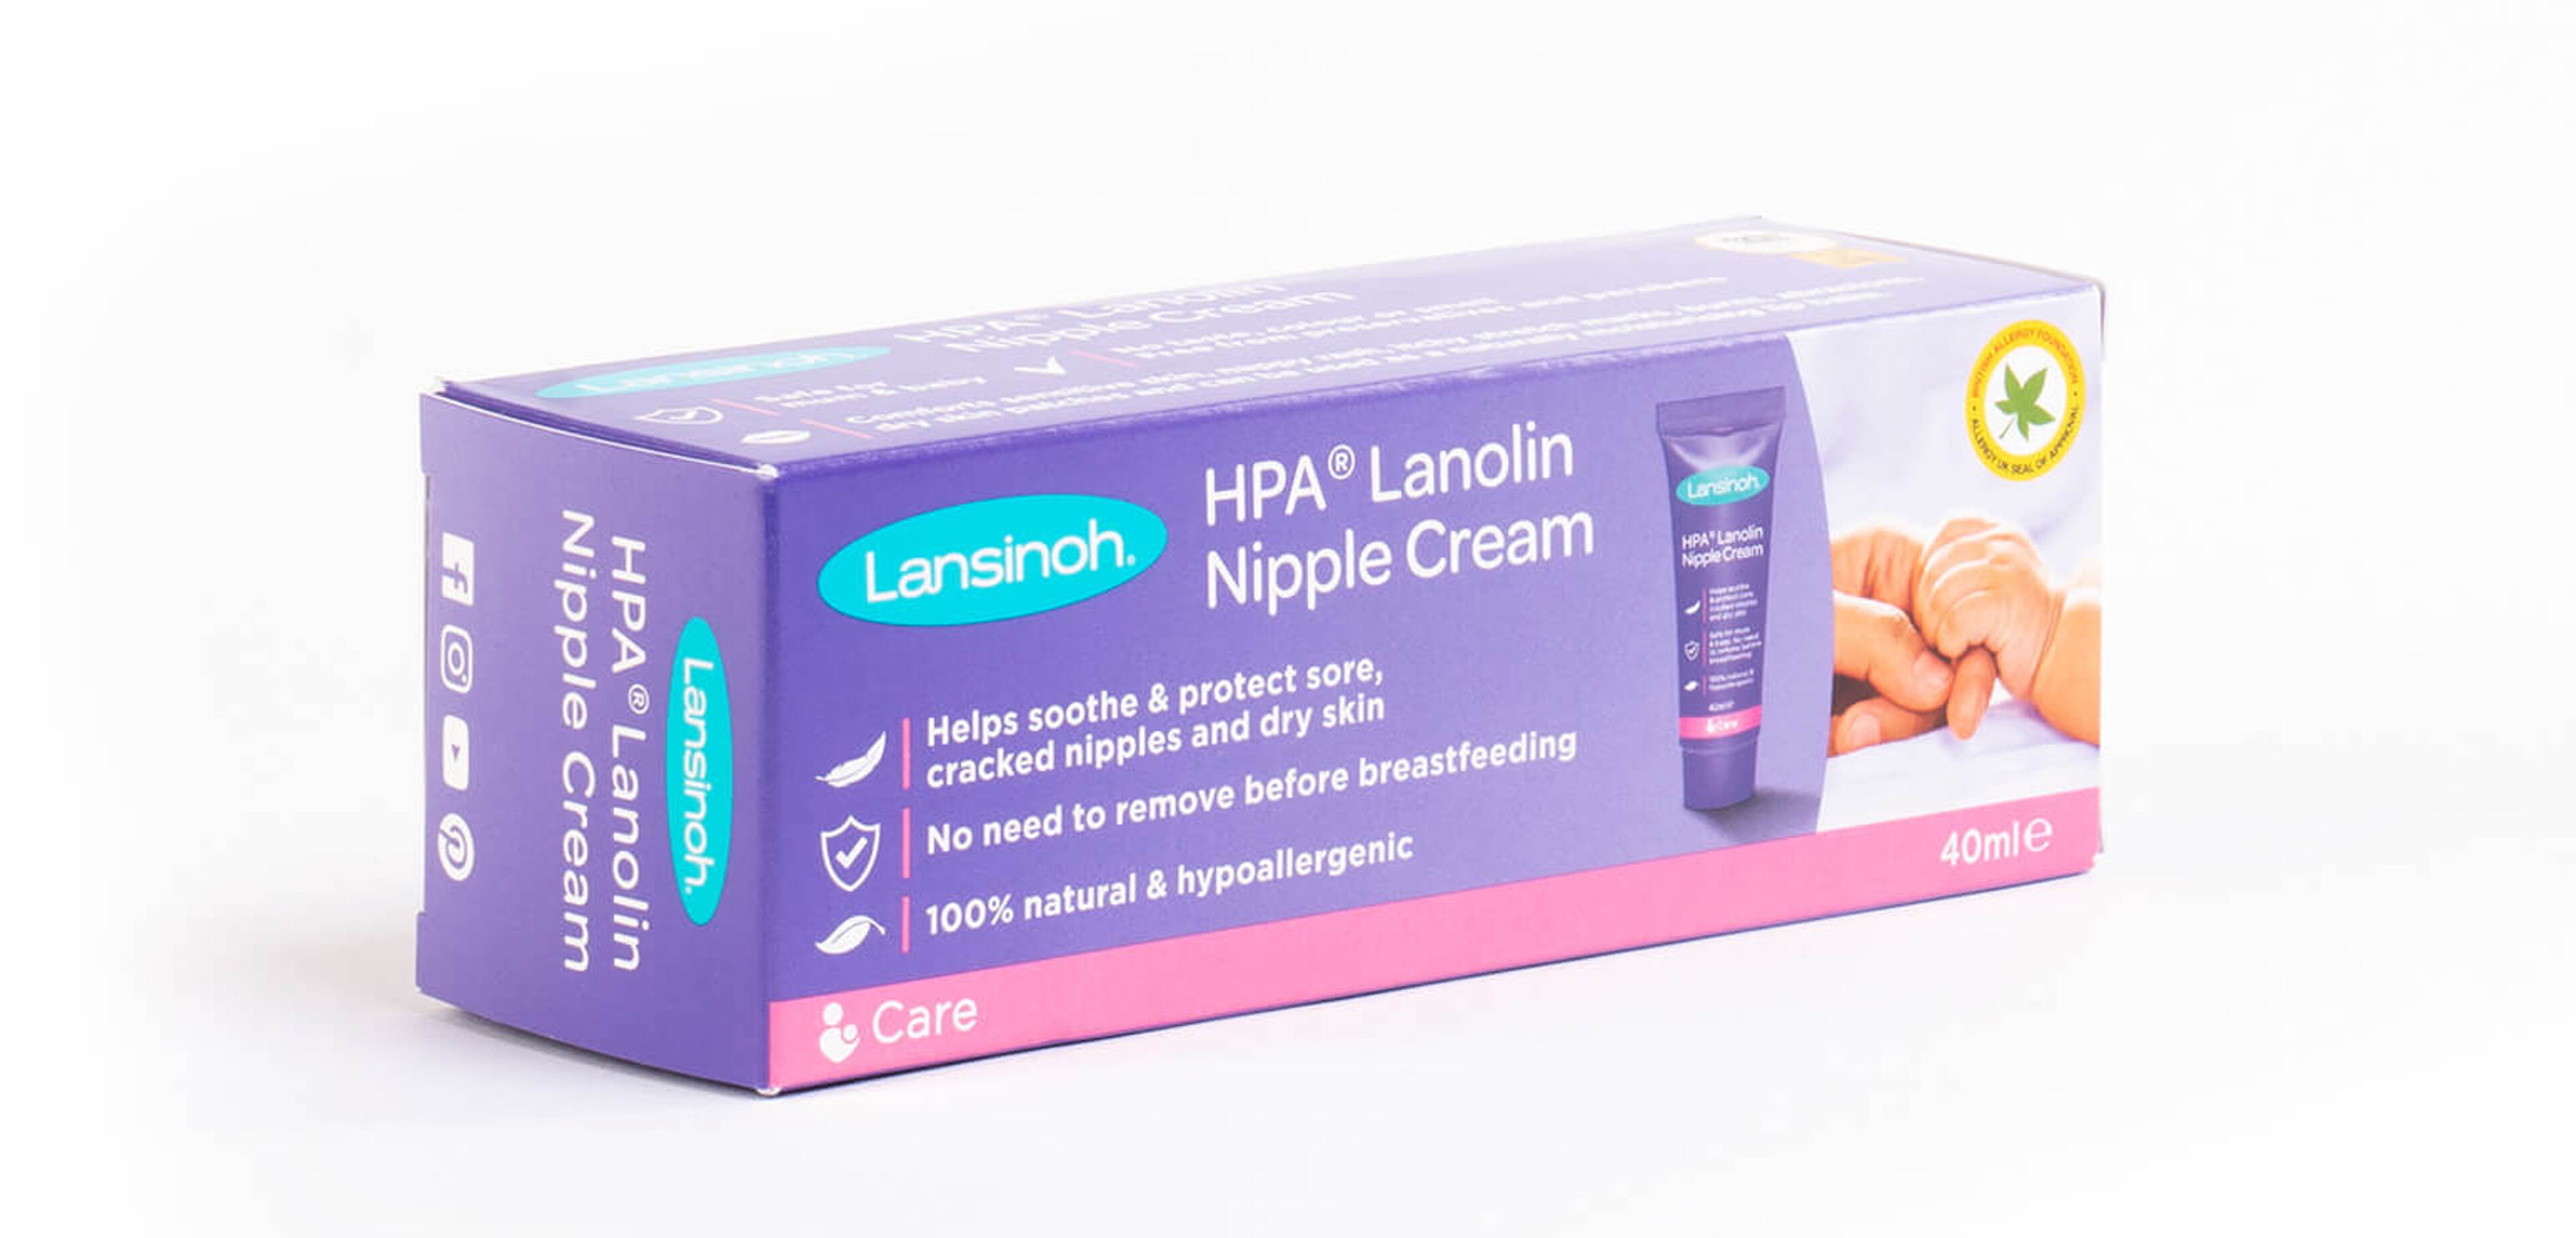 Review: Lansinoh HPA Lanolin Nipple Cream